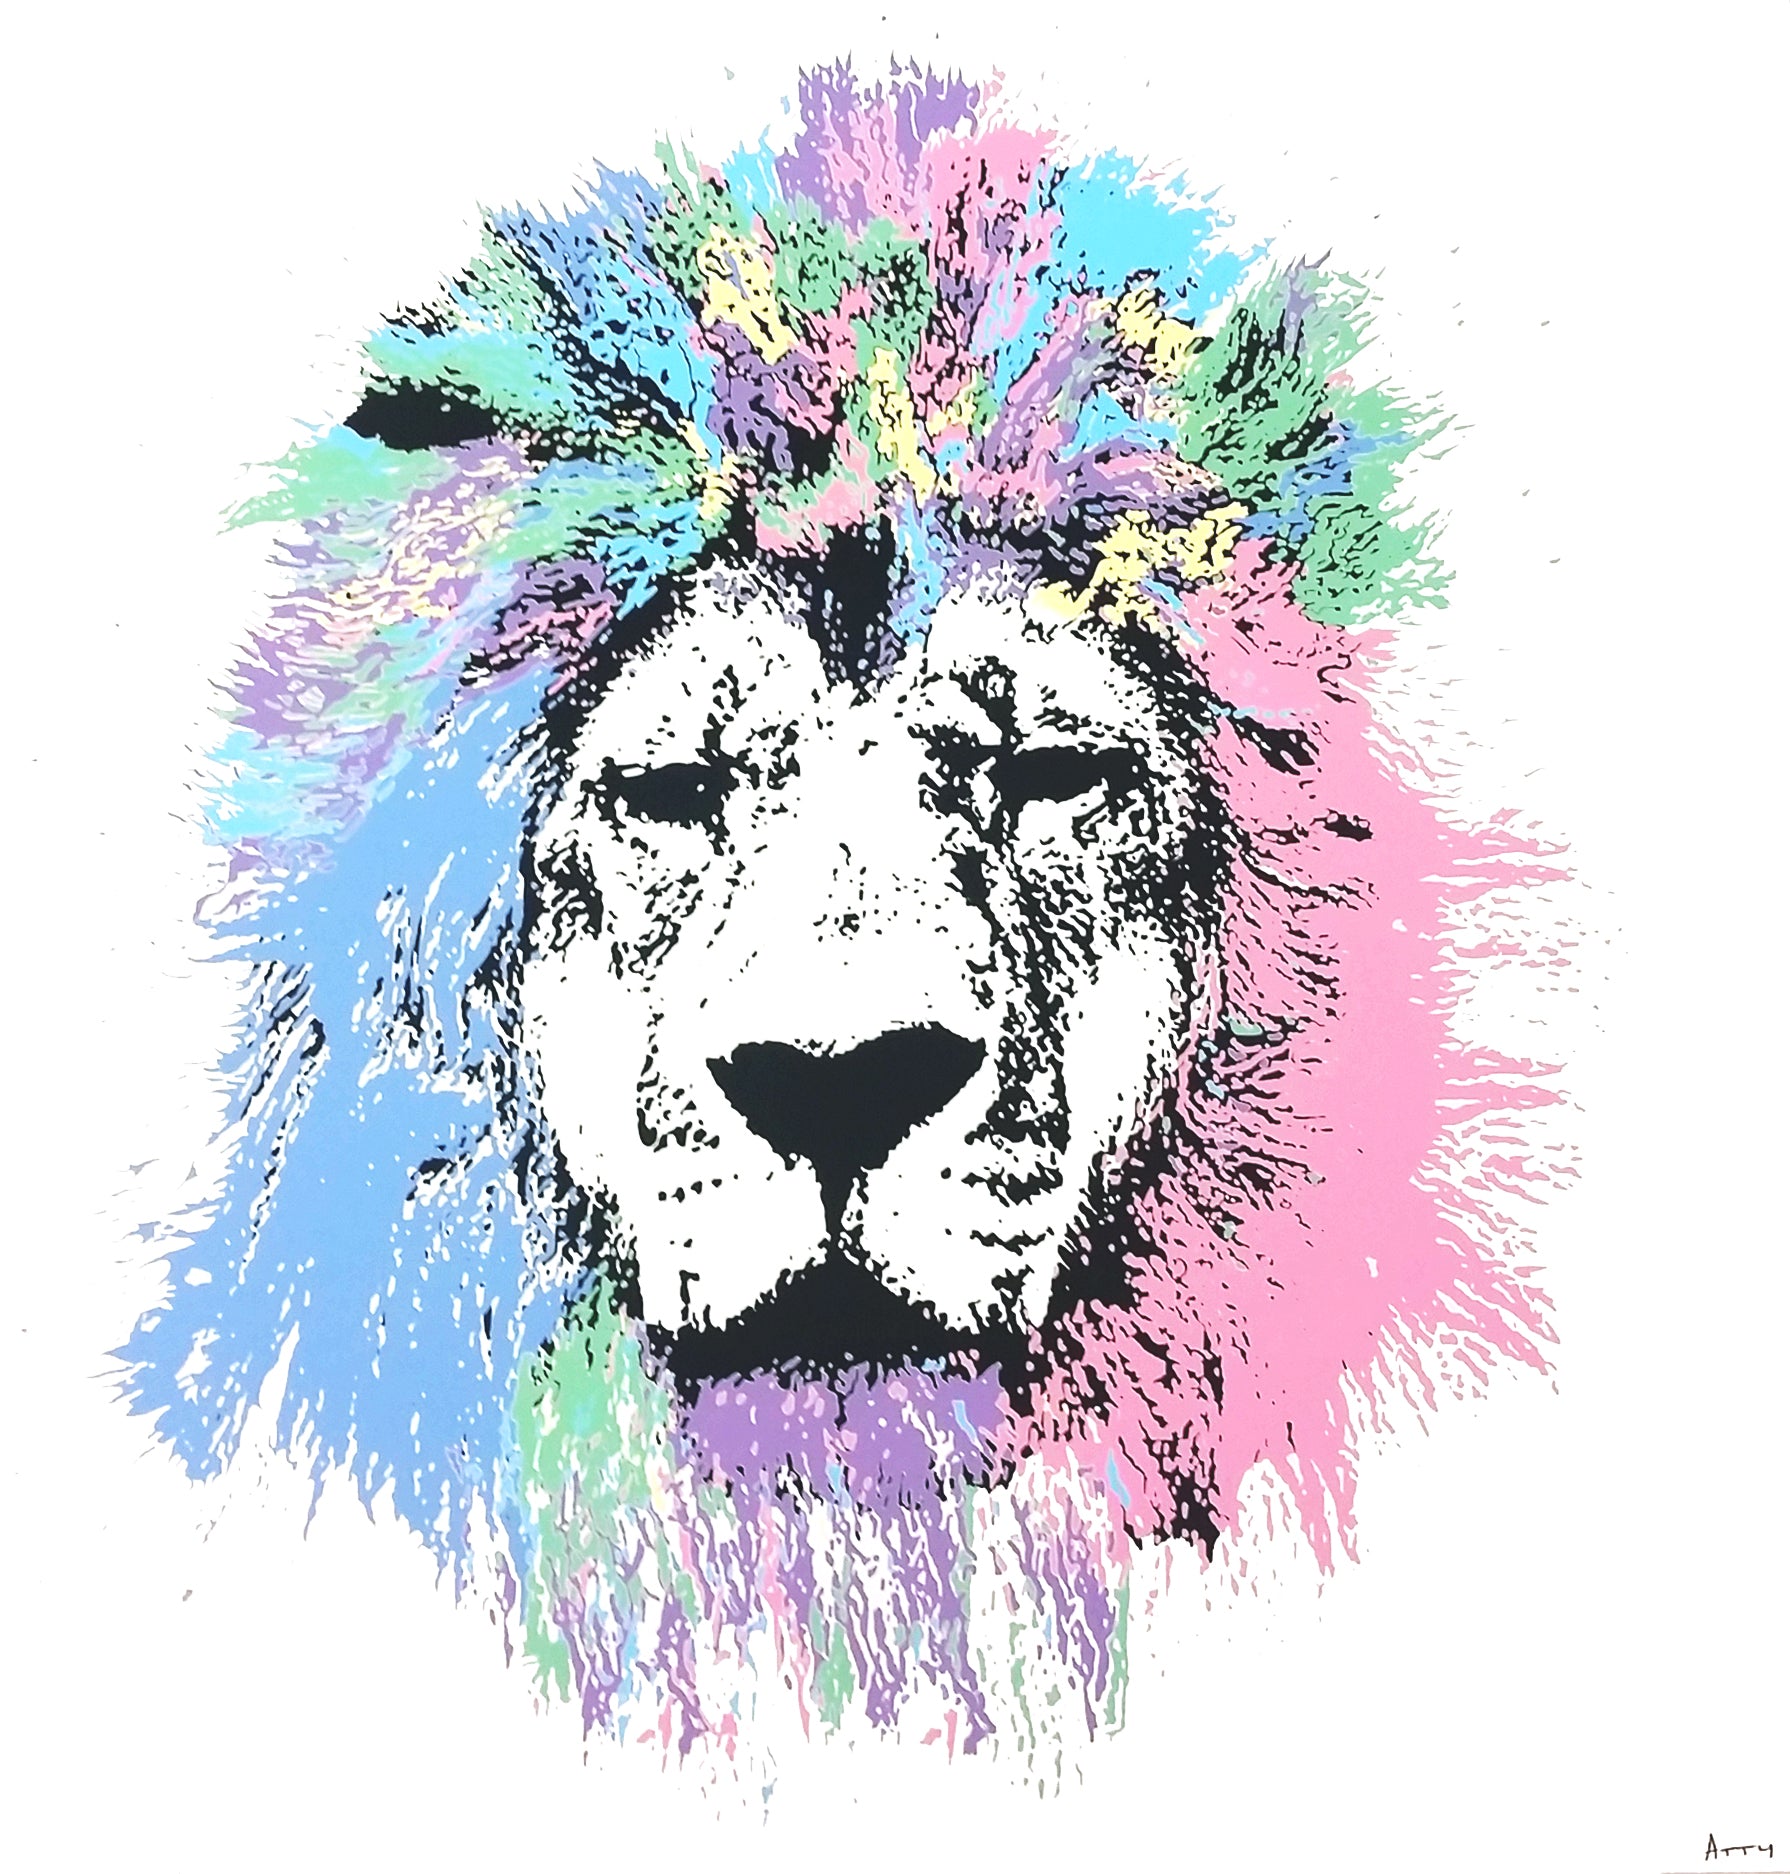 Cornelius - Lion 5/250 - Framed